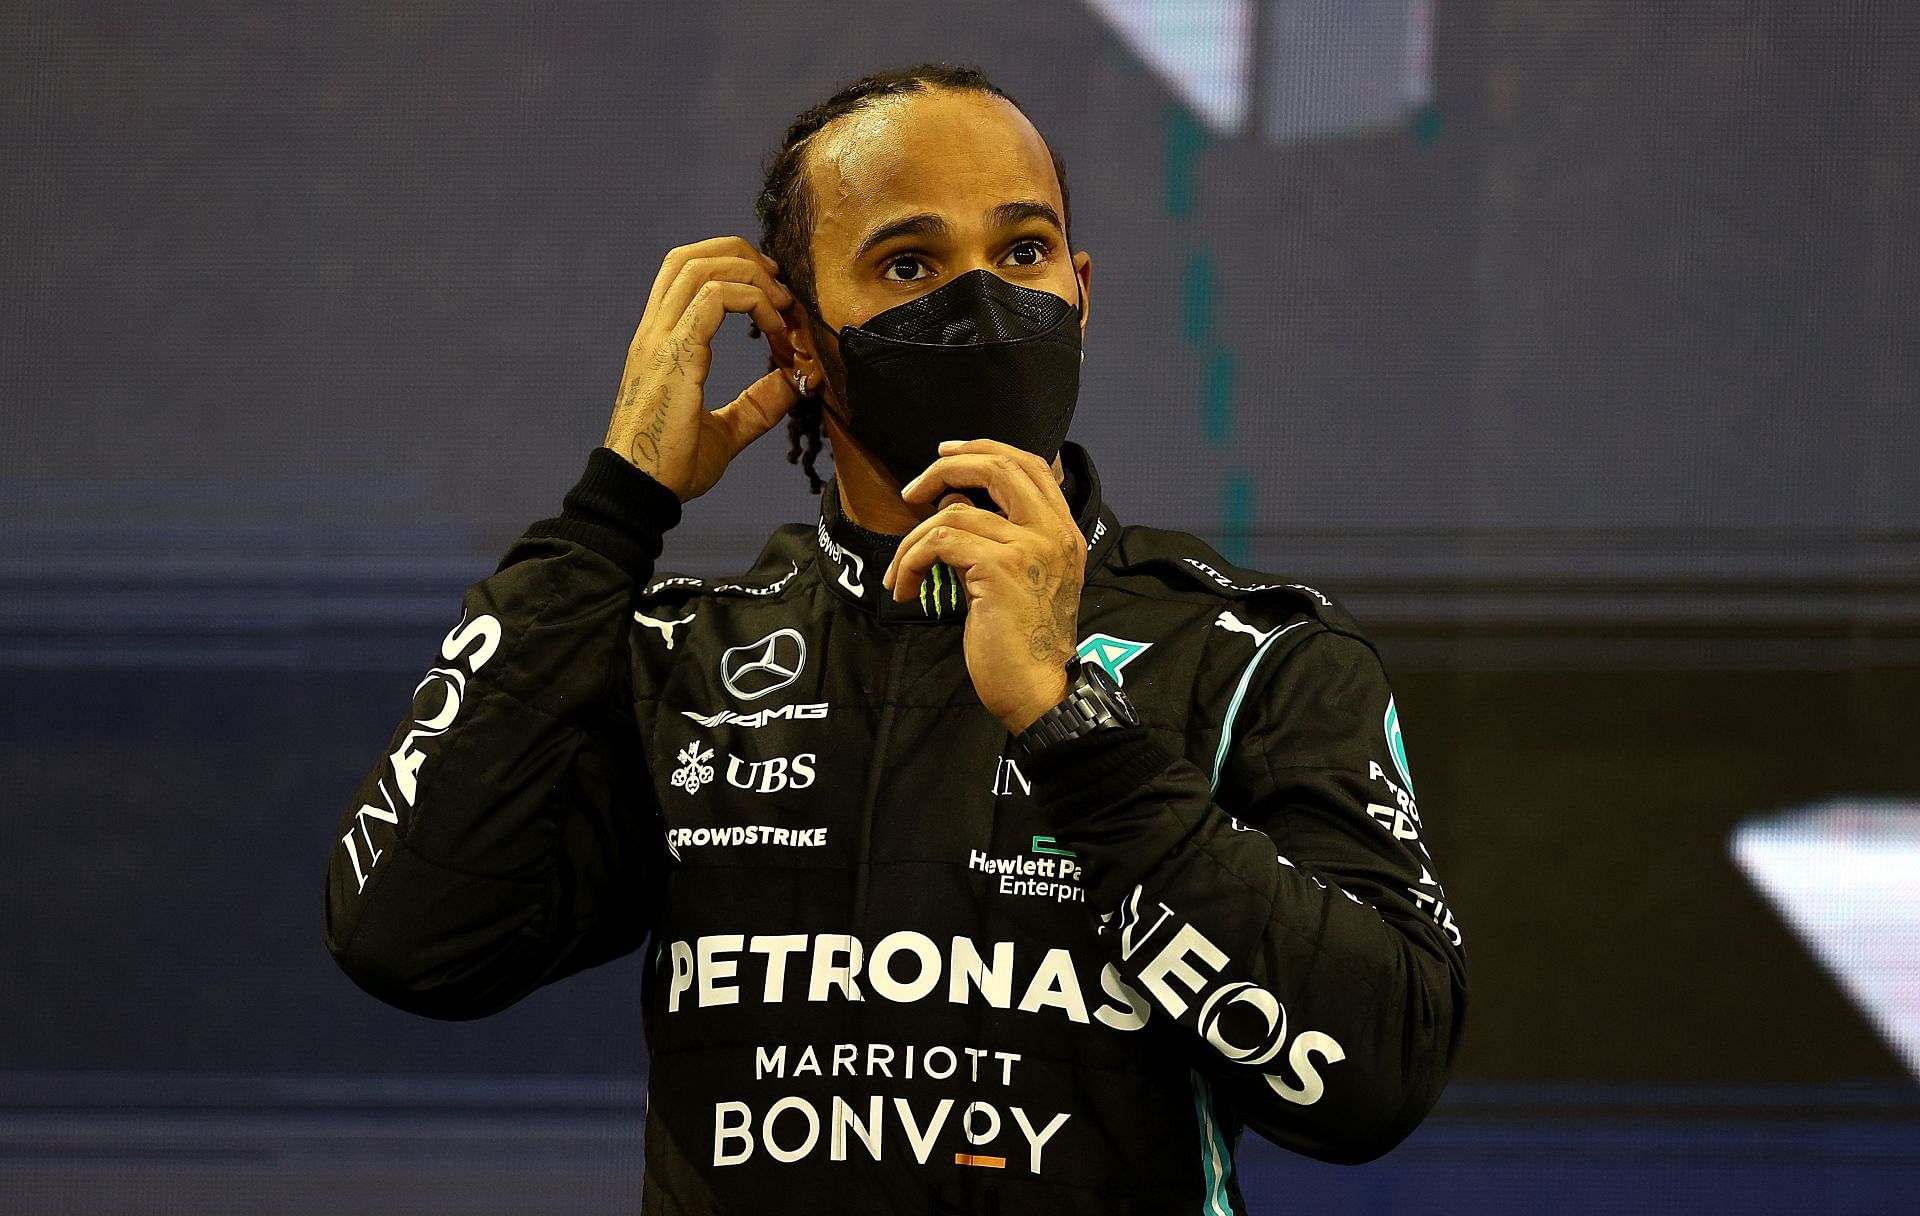 F1 Grand Prix of Abu Dhabi - Lewis Hamilton on the podium